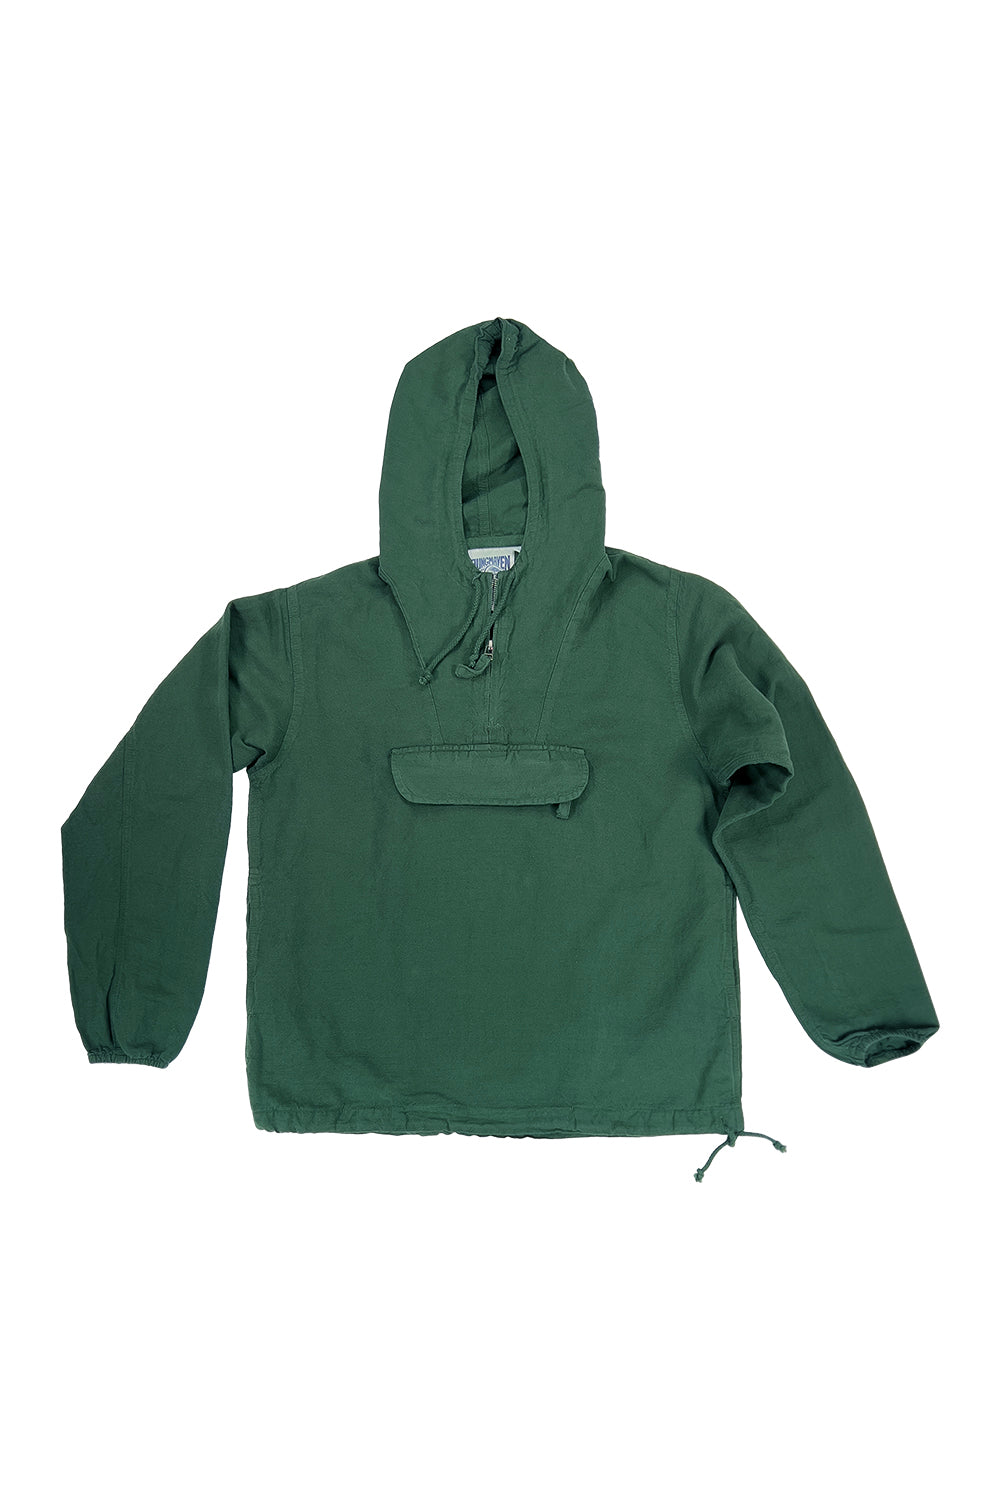 Shoreline Anorak Jacket | Jungmaven Hemp Clothing & Accessories / Color: Hunter Green